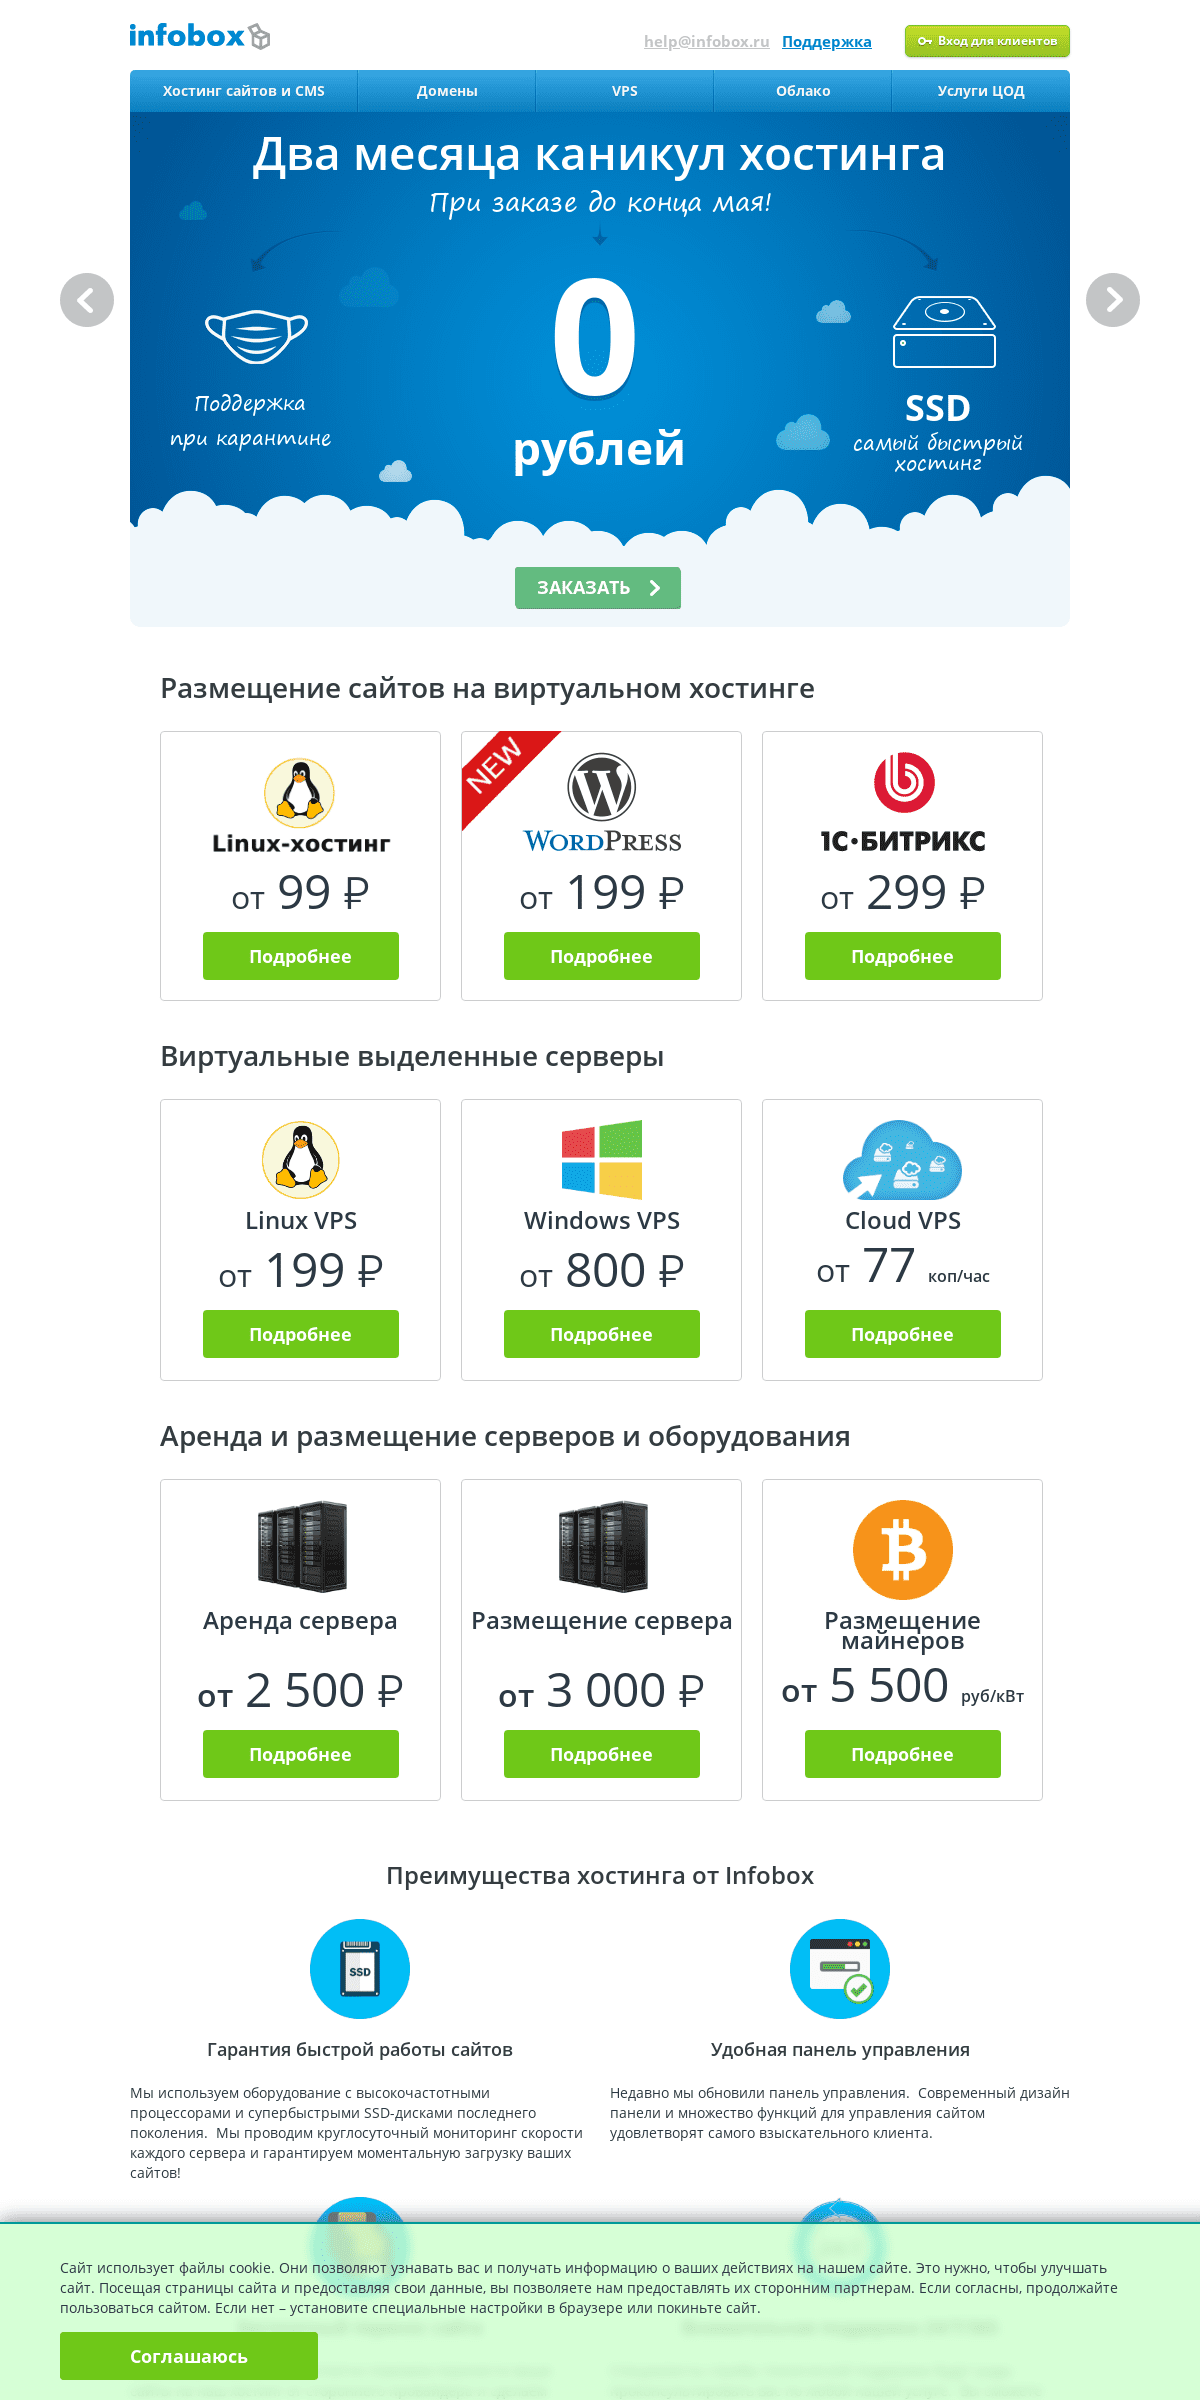 A complete backup of infobox.ru